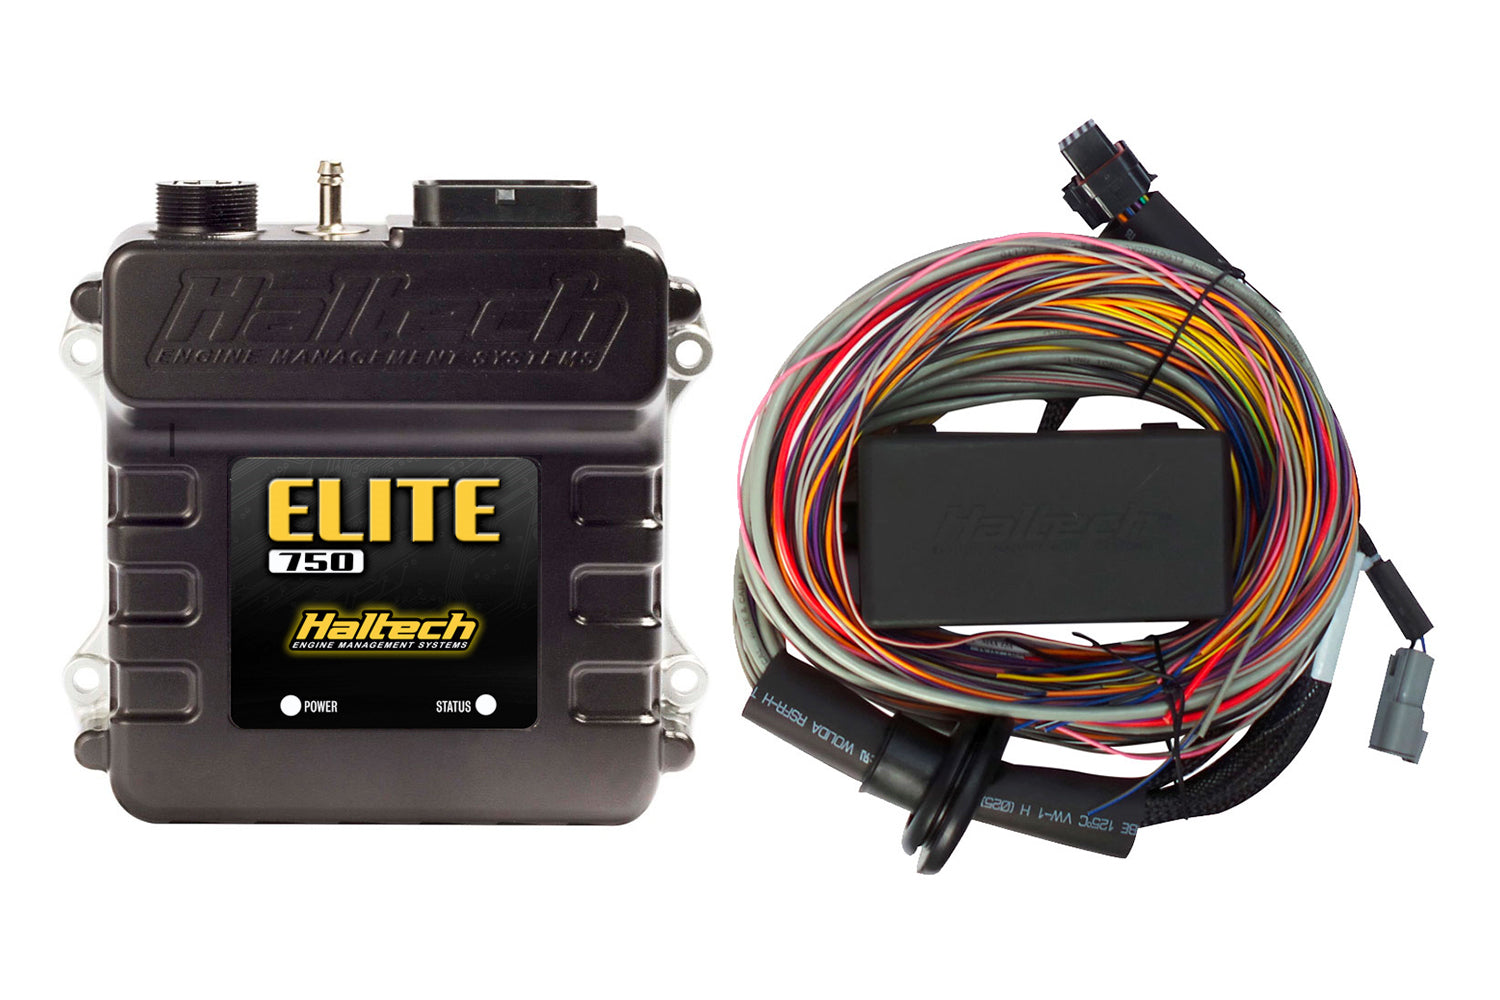 Haltech Elite 750 + Premium Universal Wire-in Harness Kit Length: 2.5m (8') - HT-150604 HT-150604